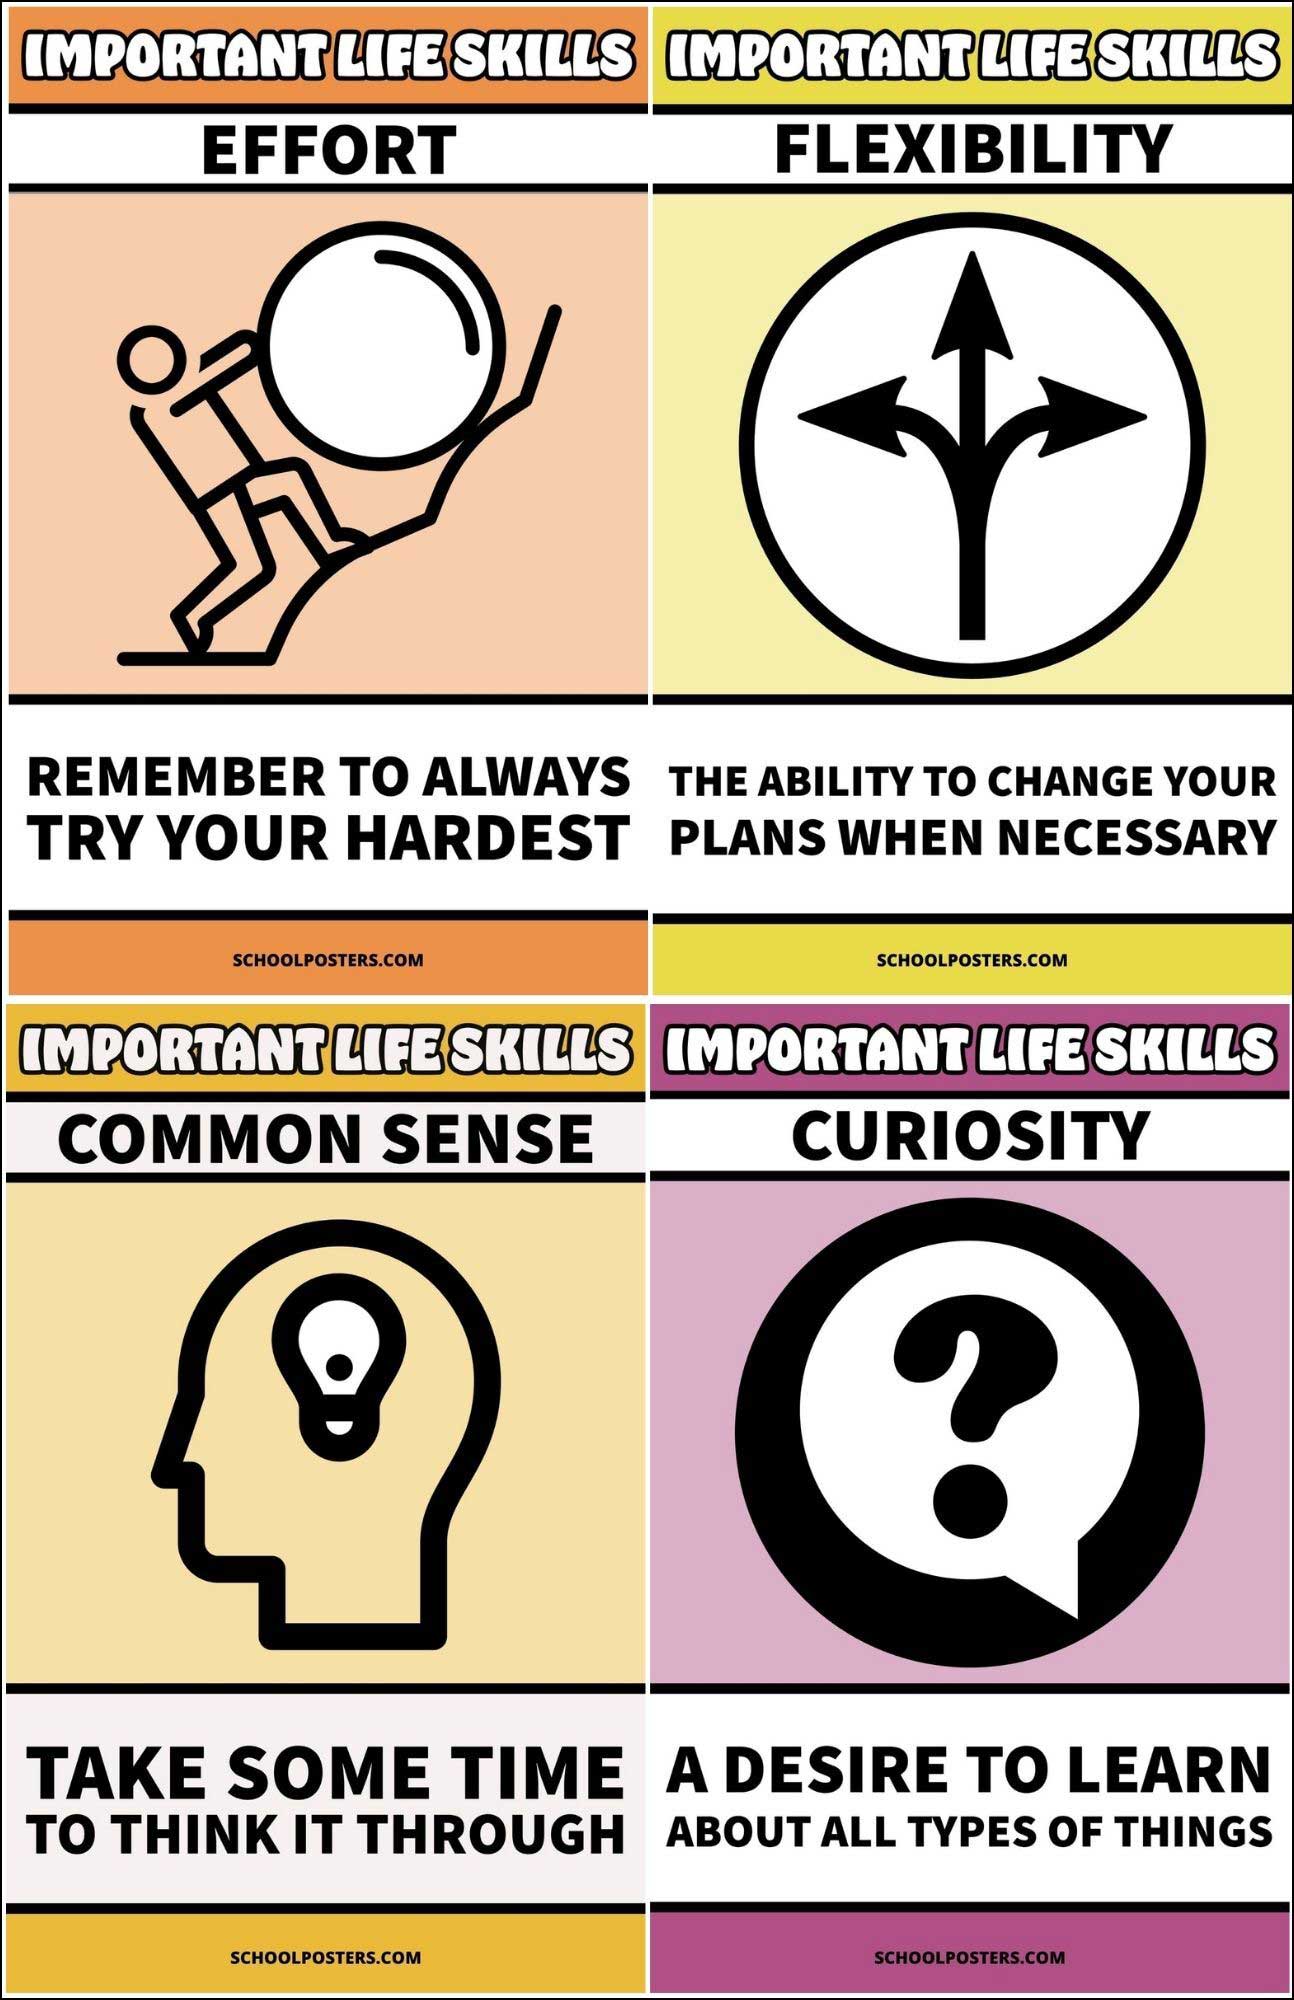 life skills poster